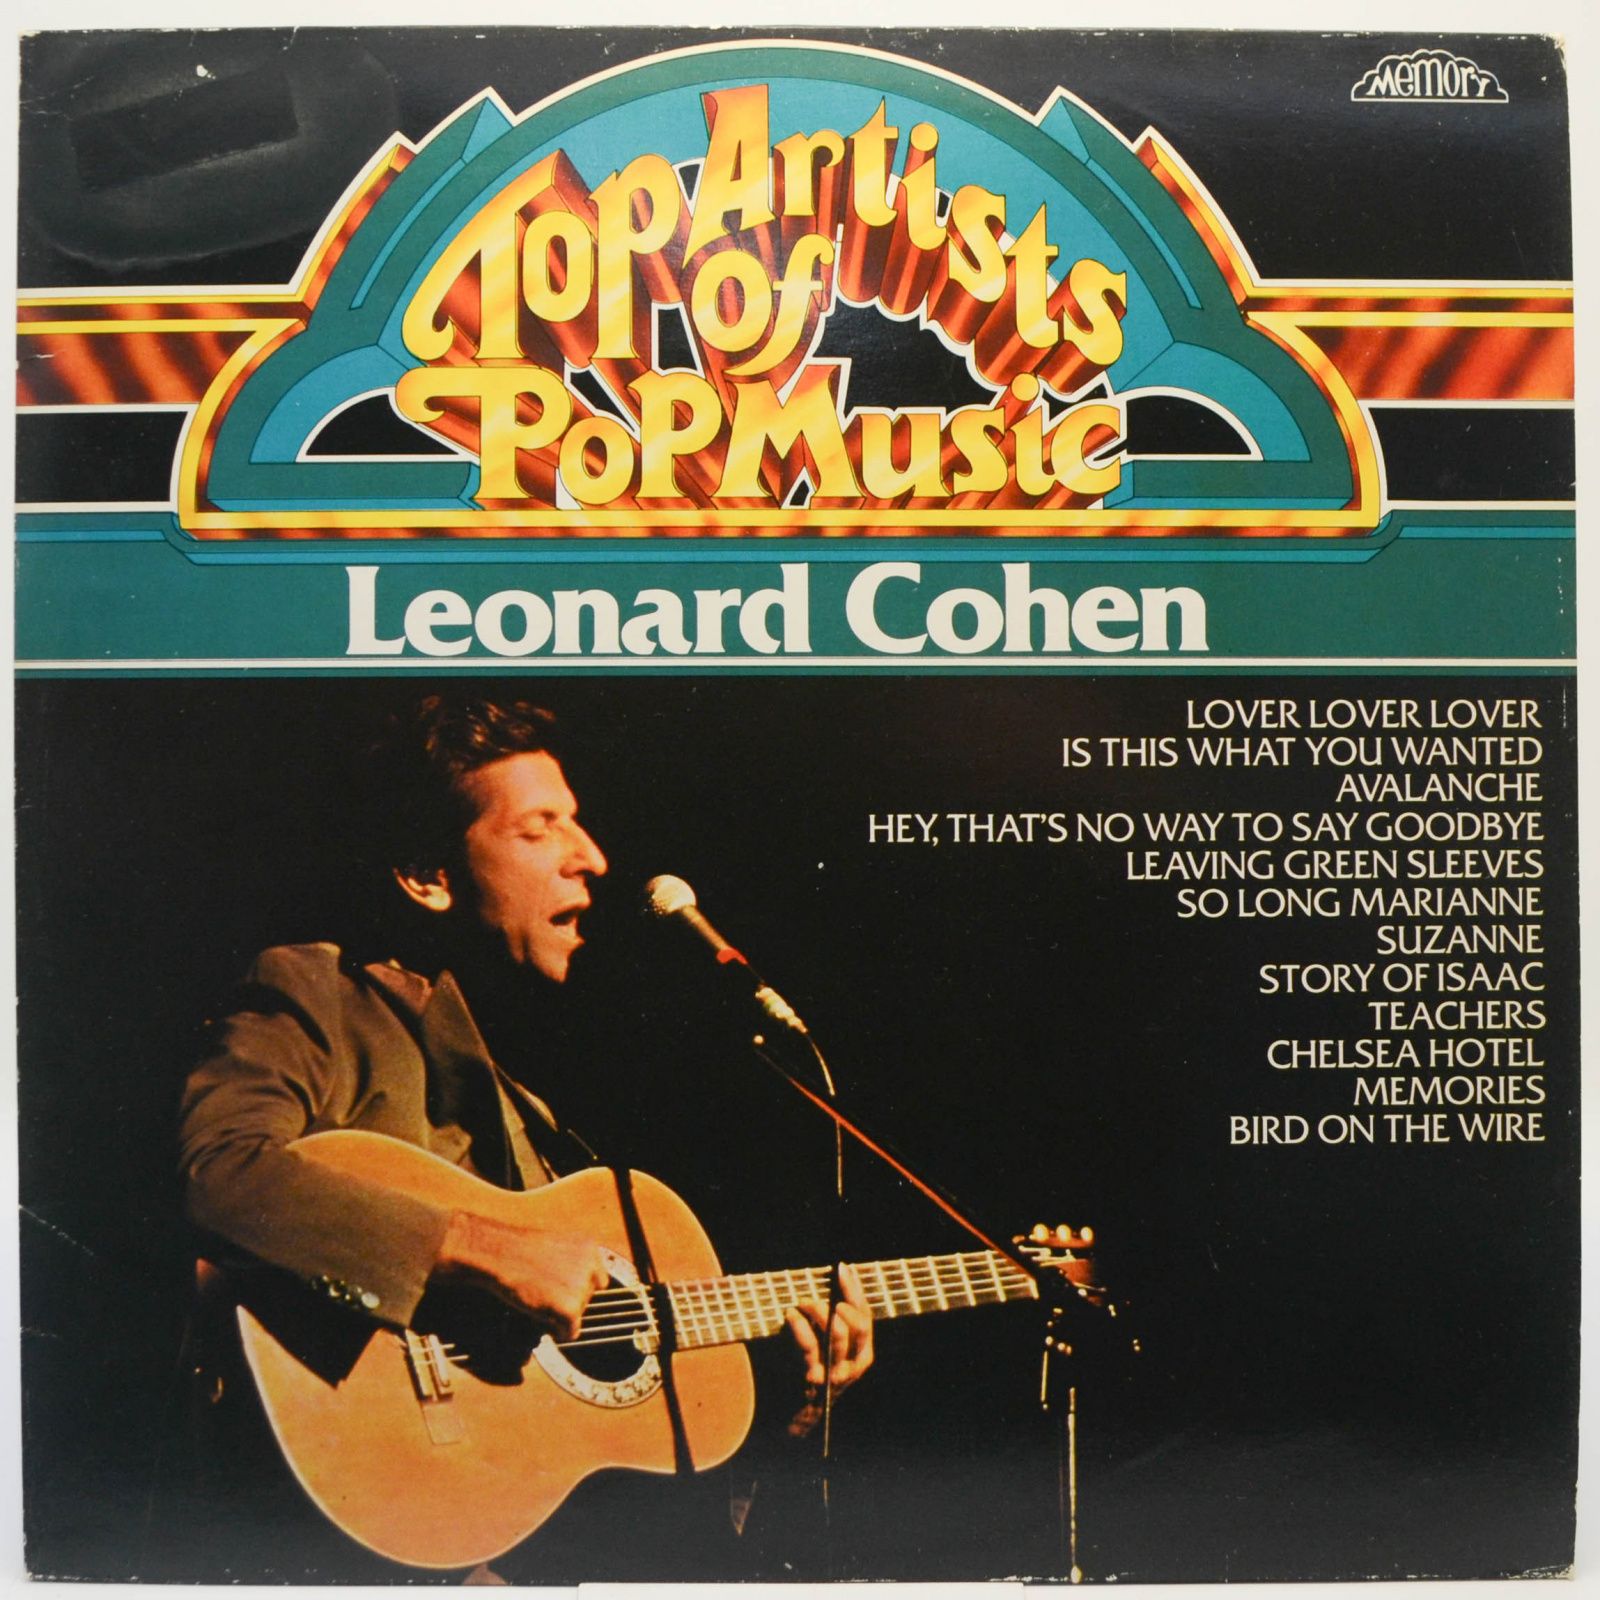 Leonard Cohen — Top Artists Of Pop Music, 1982